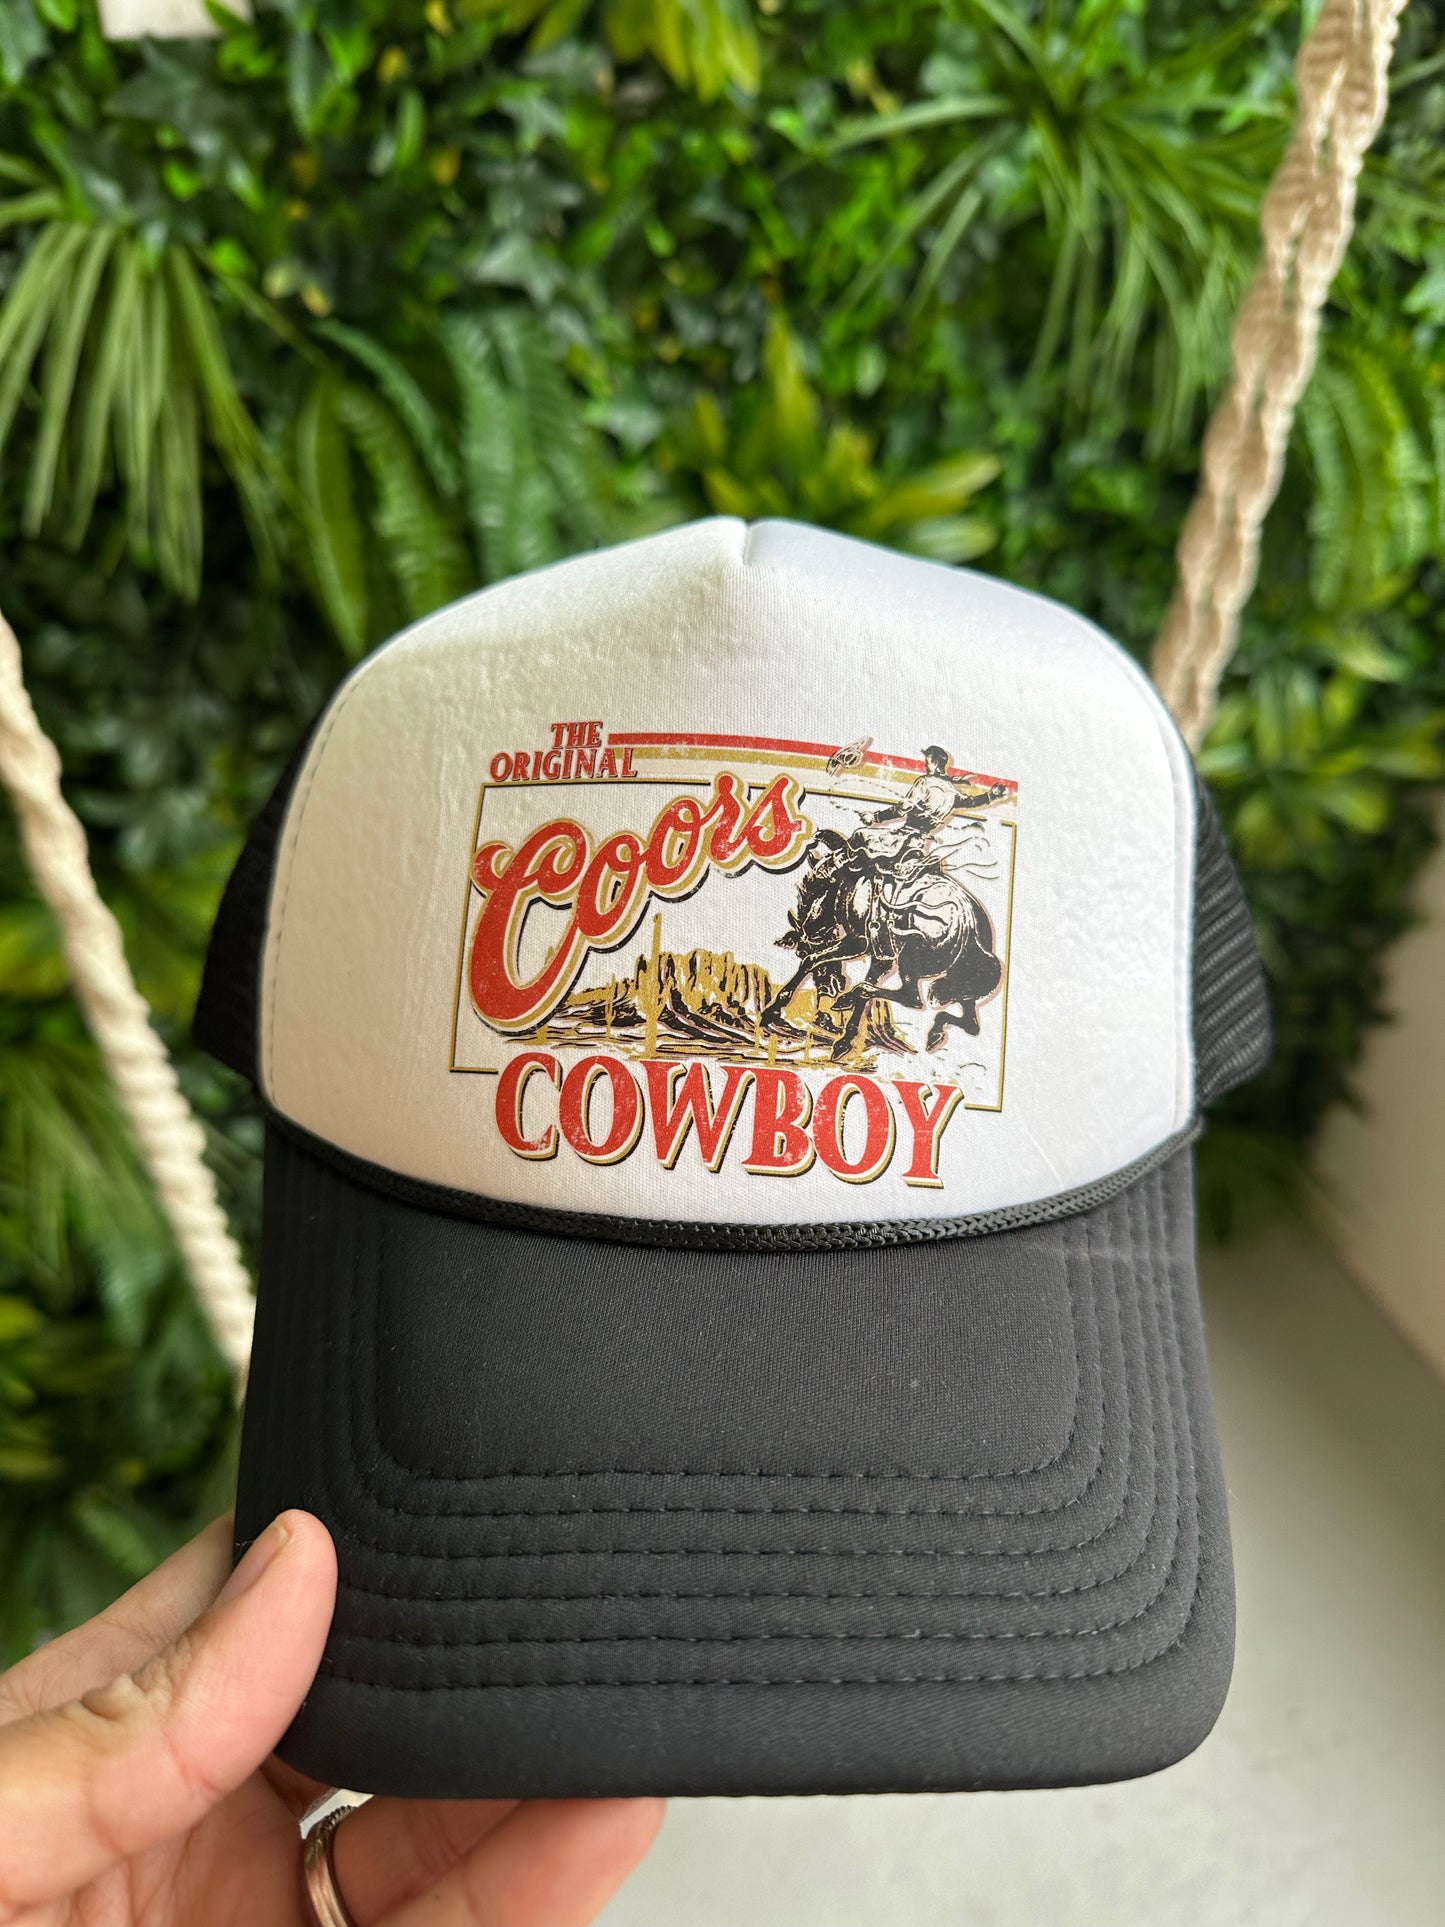 Coors cowboy trucker hat